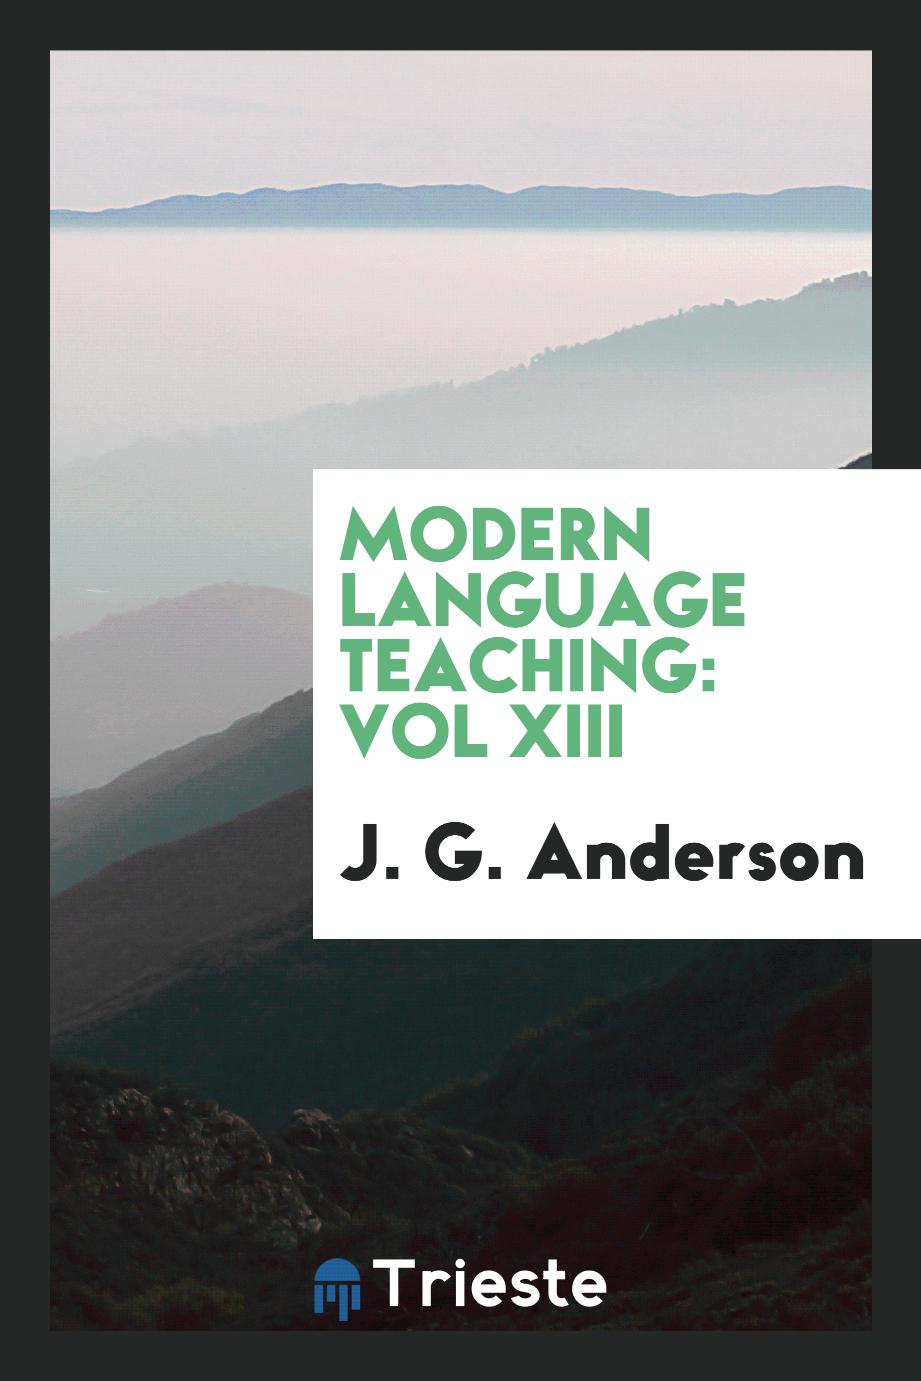 Modern language teaching: Vol XIII